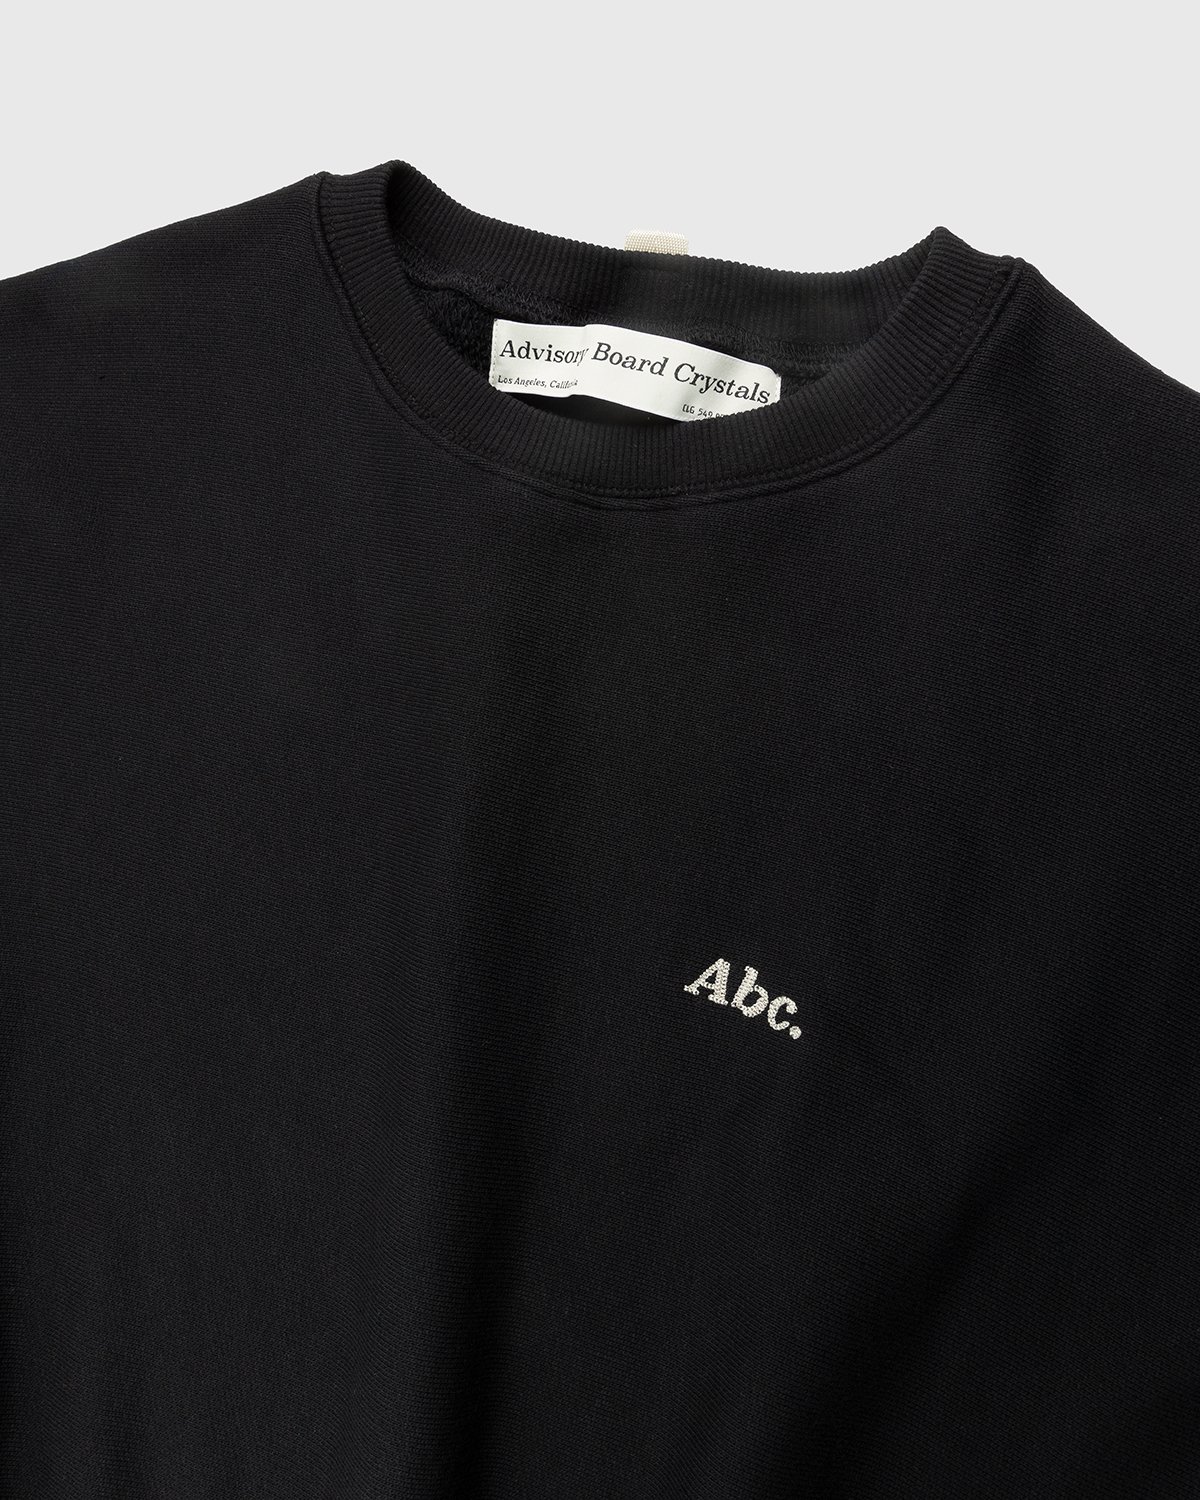 Abc. - French Terry Crewneck Sweatshirt Anthracite - Clothing - Black - Image 5